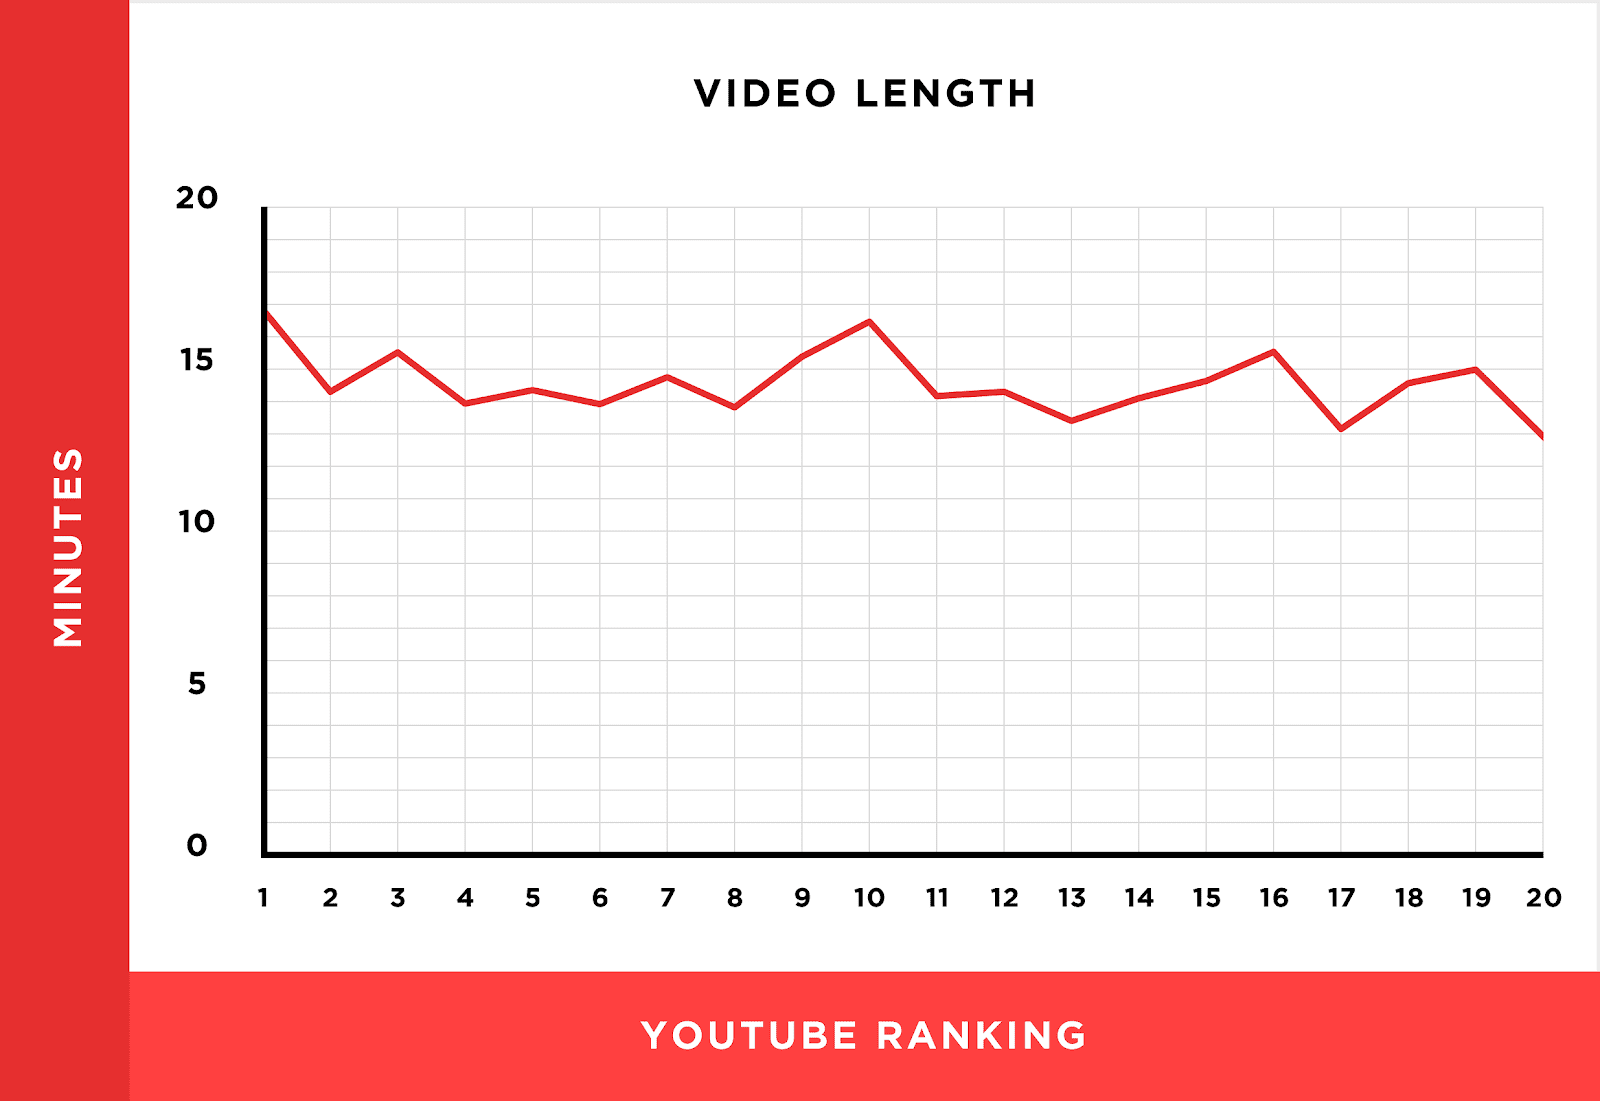 Longer videos tend to rank better in YouTube